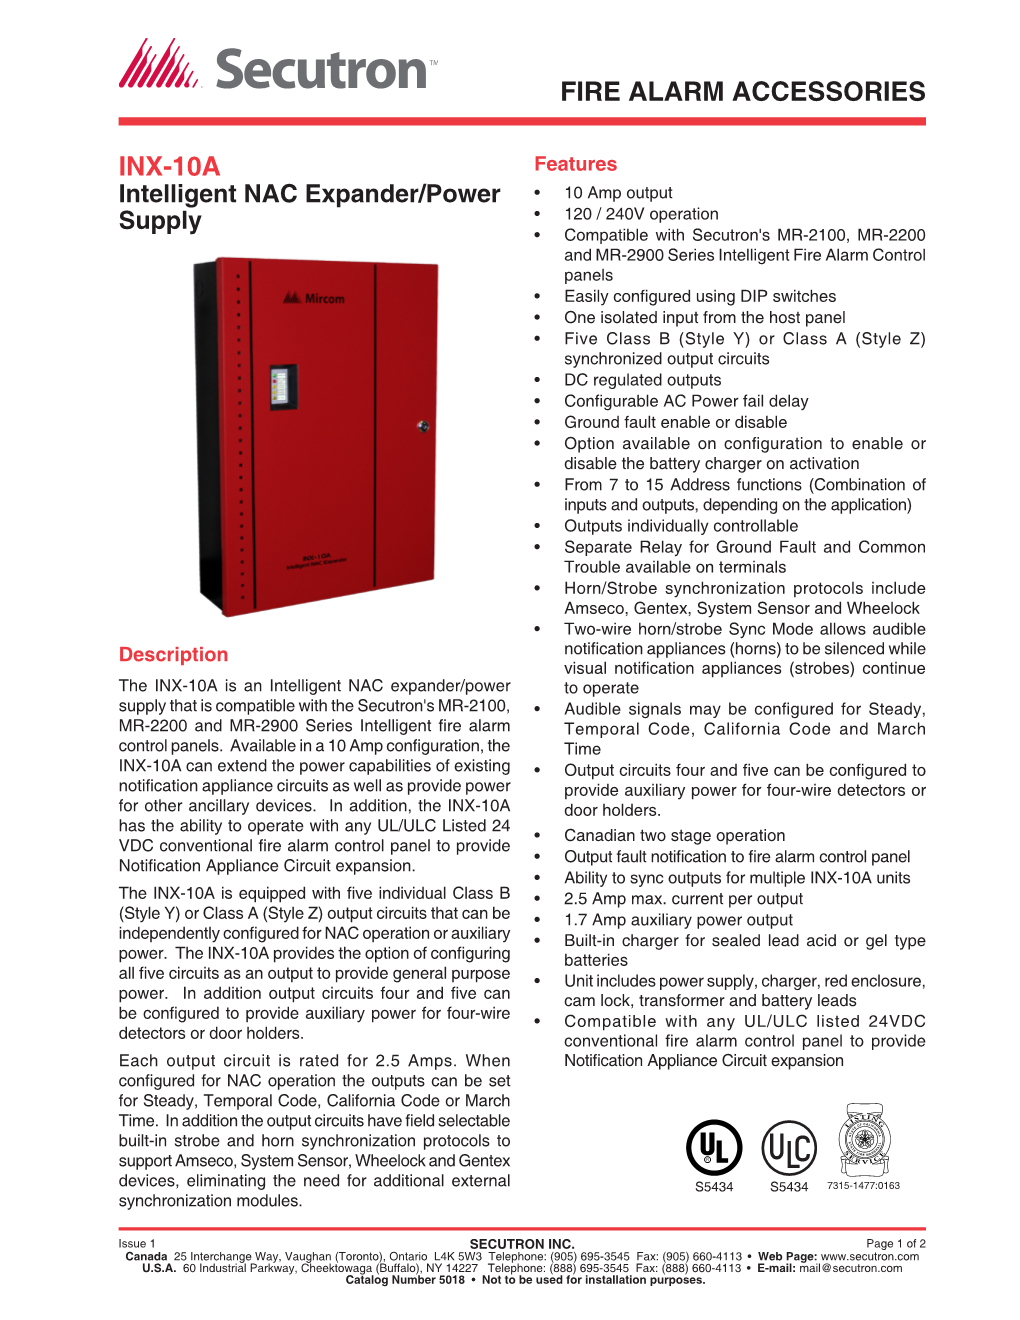 Fire Alarm Accessories Inx-10A